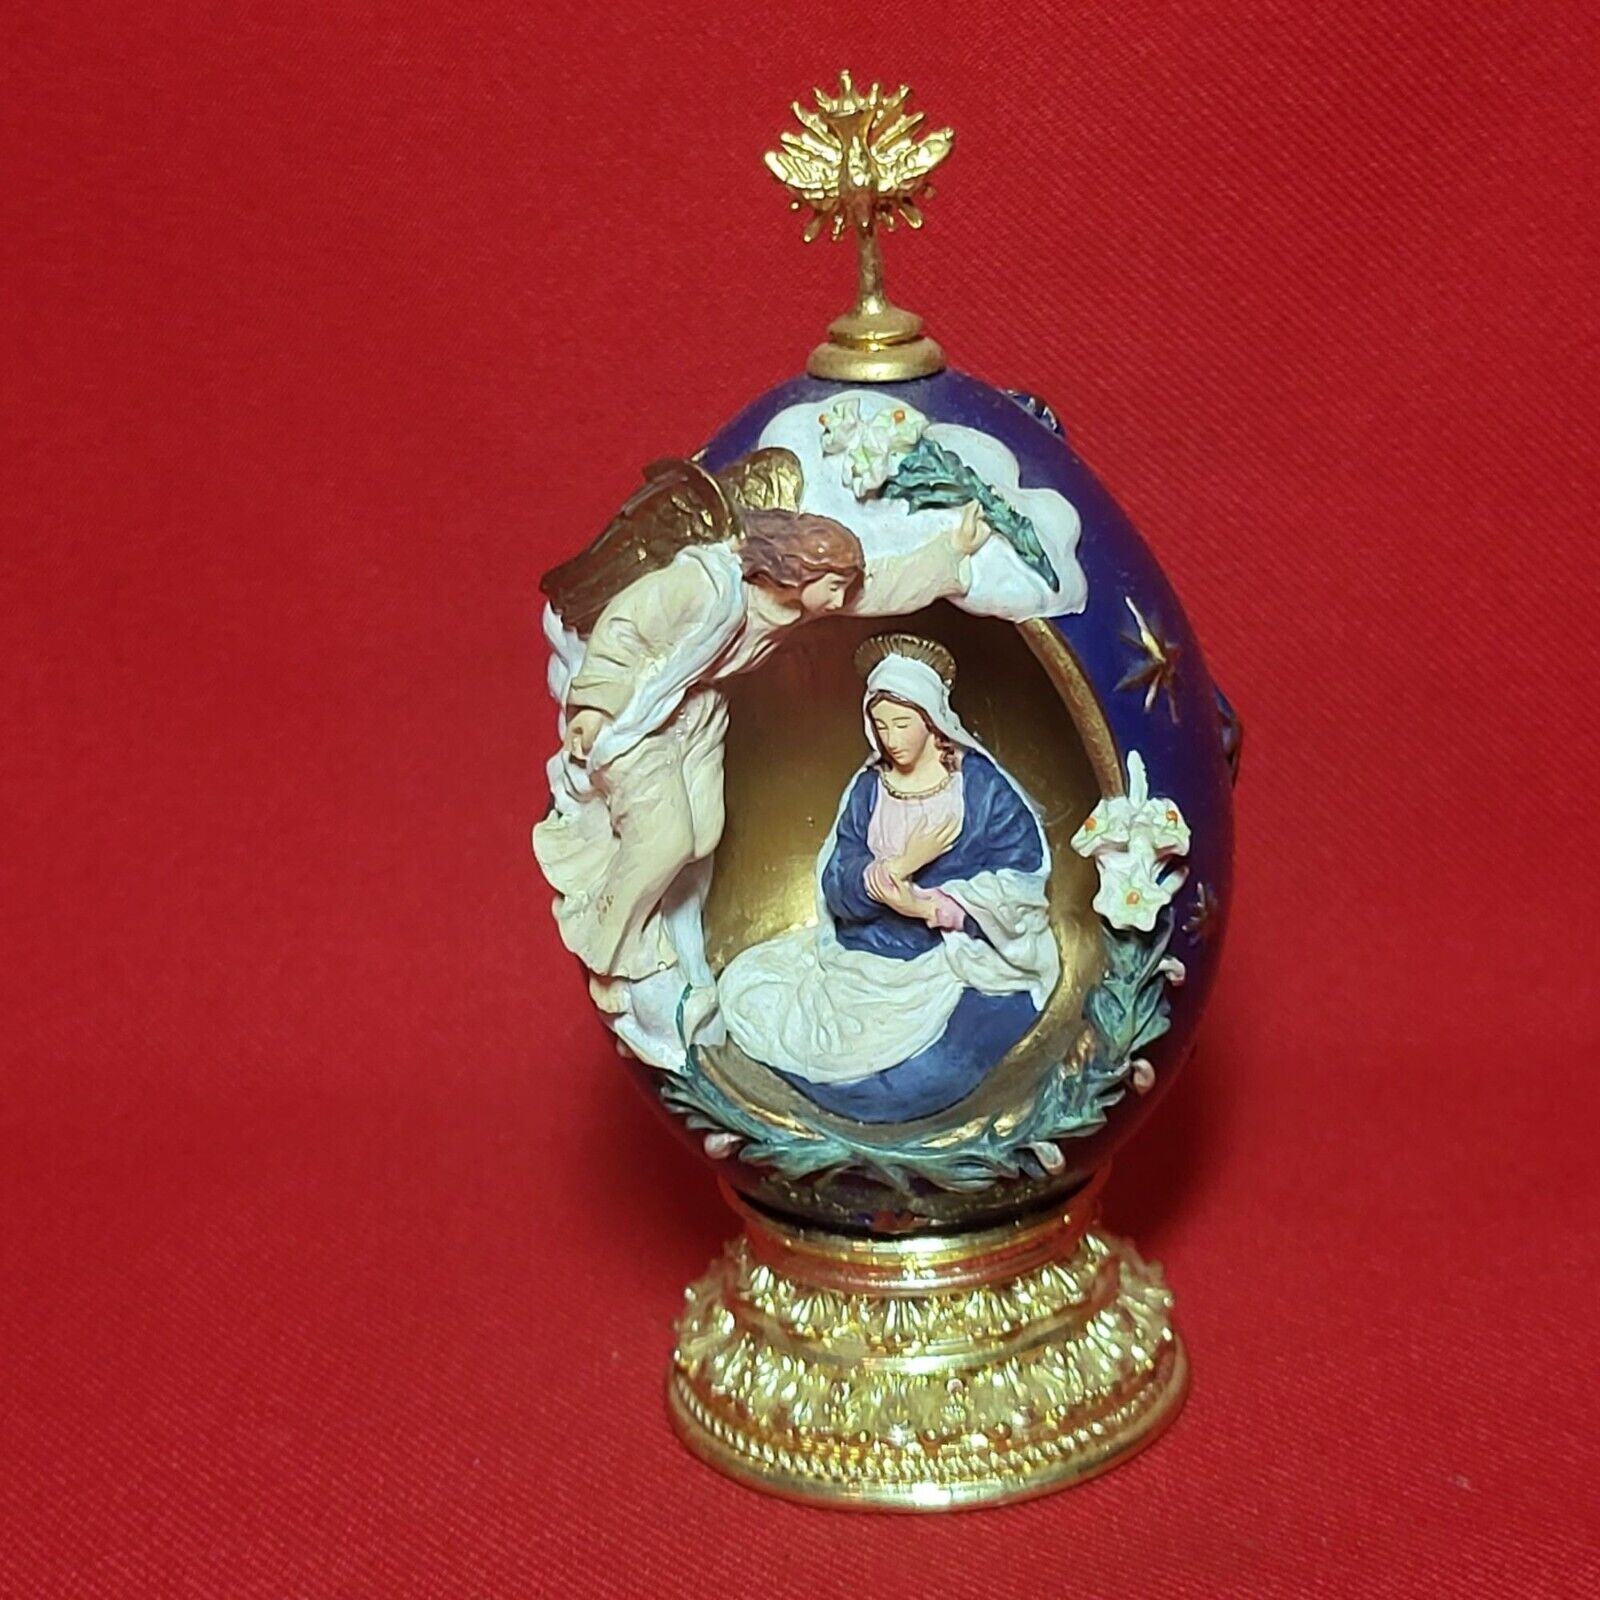 VTG House of Faberge The Annunciation Cold Cast Porcelain Decor Egg